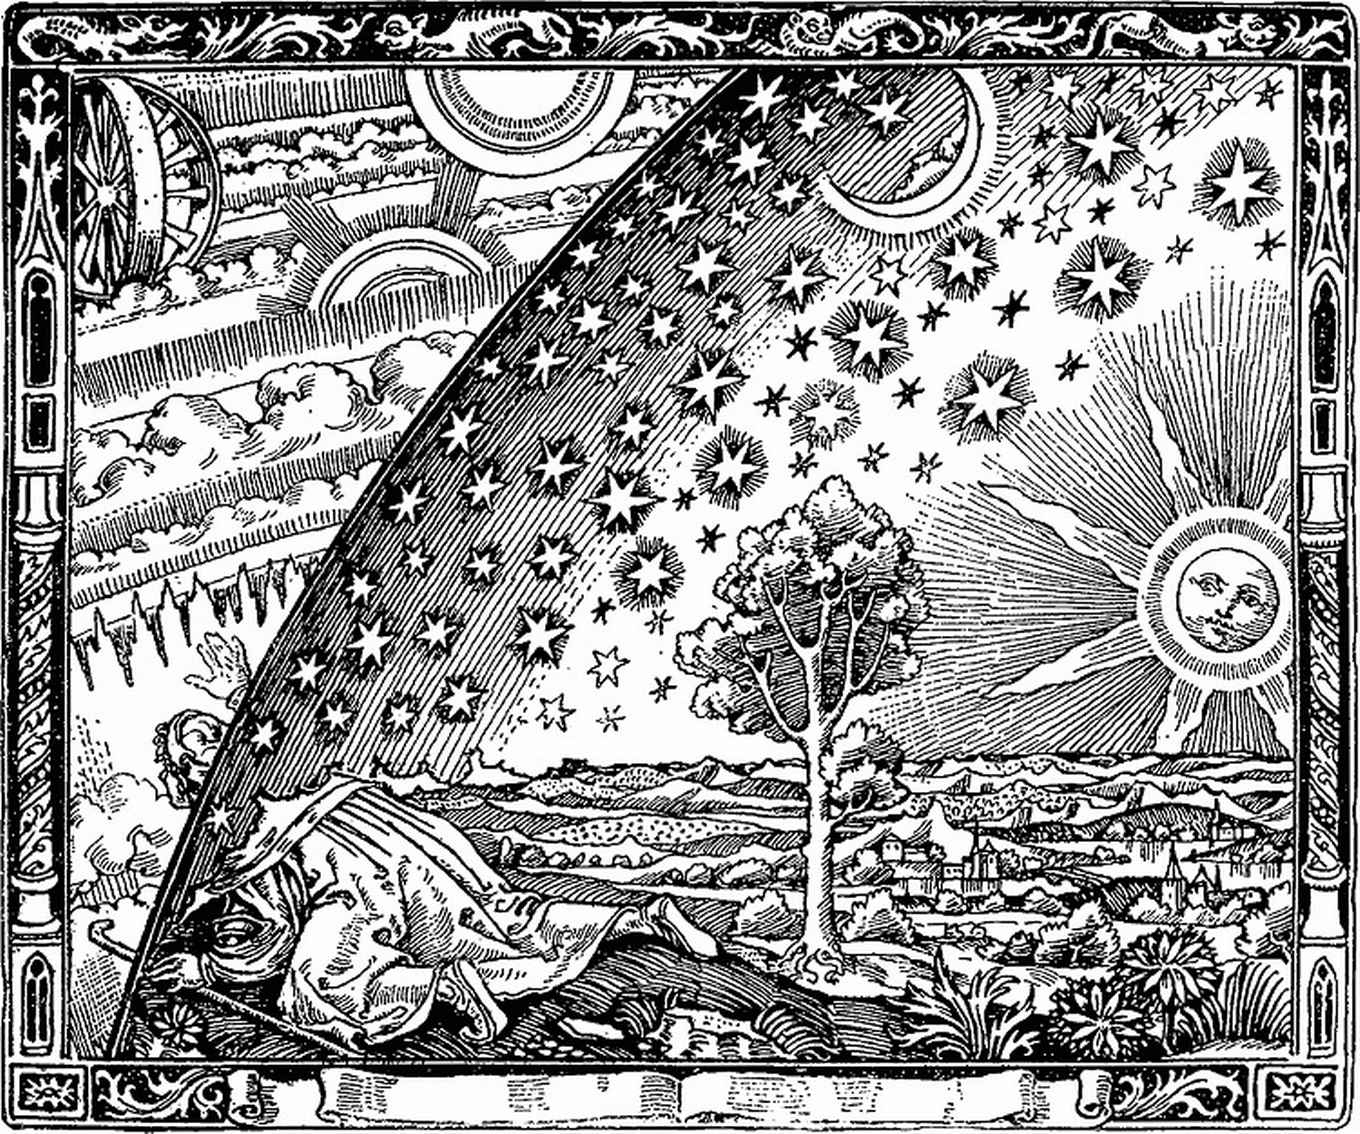 Flammarion-gravure